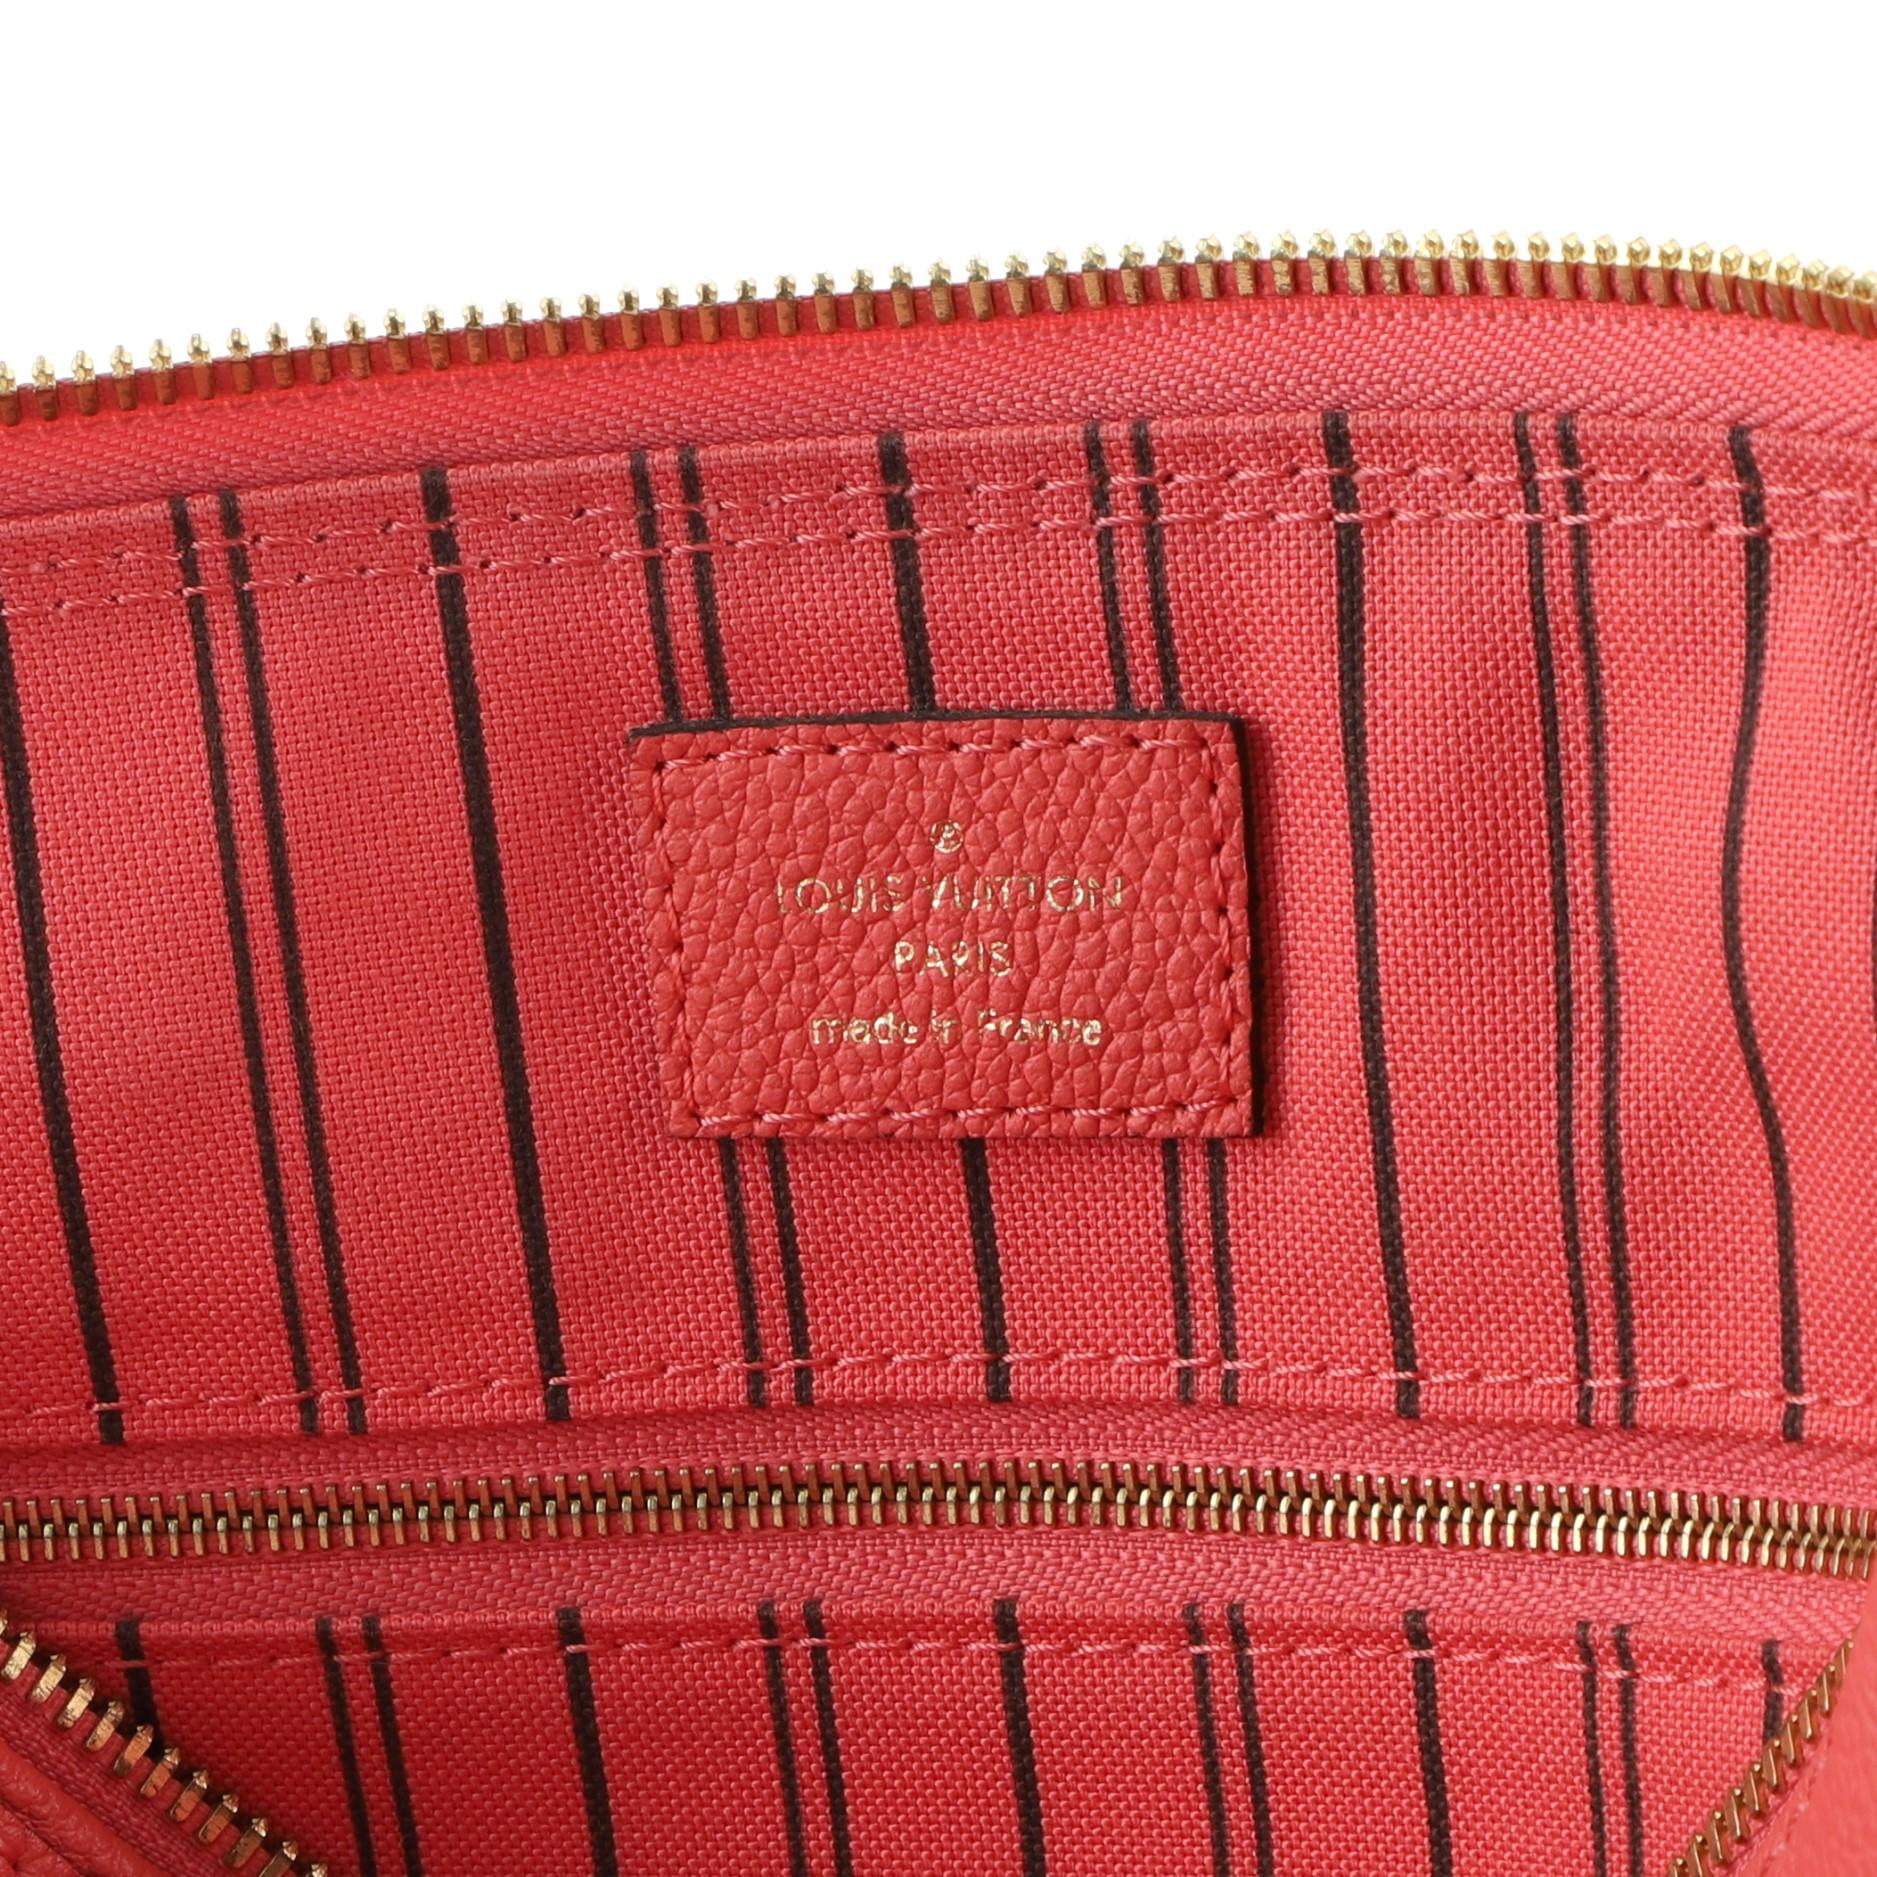 Women's or Men's Louis Vuitton Speedy Bandouliere NM Handbag Monogram Empreinte Leather 25